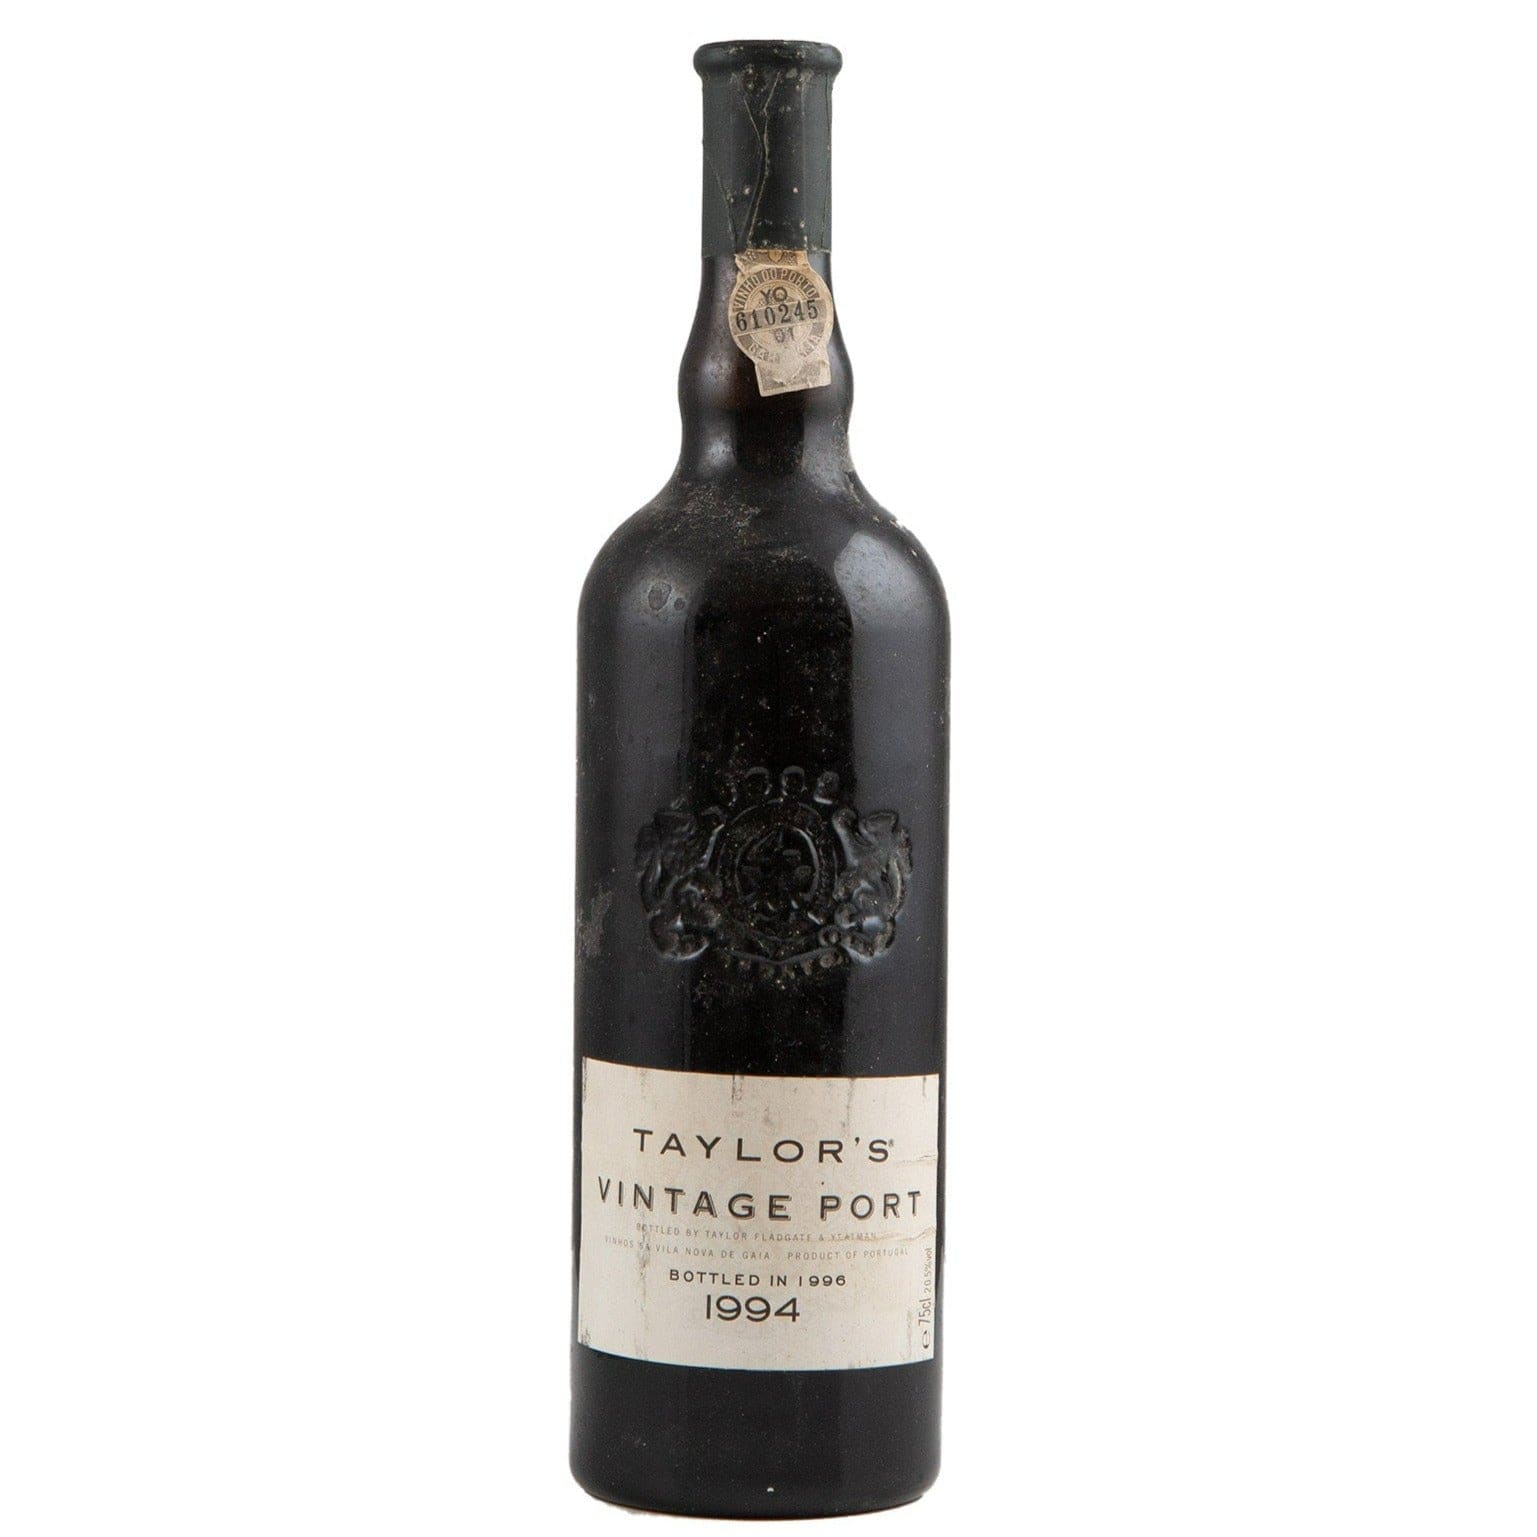 Single bottle of Fortified wine Taylor's, Vintage Port, Vintage Port, 1994 Touriga Nacional & Other